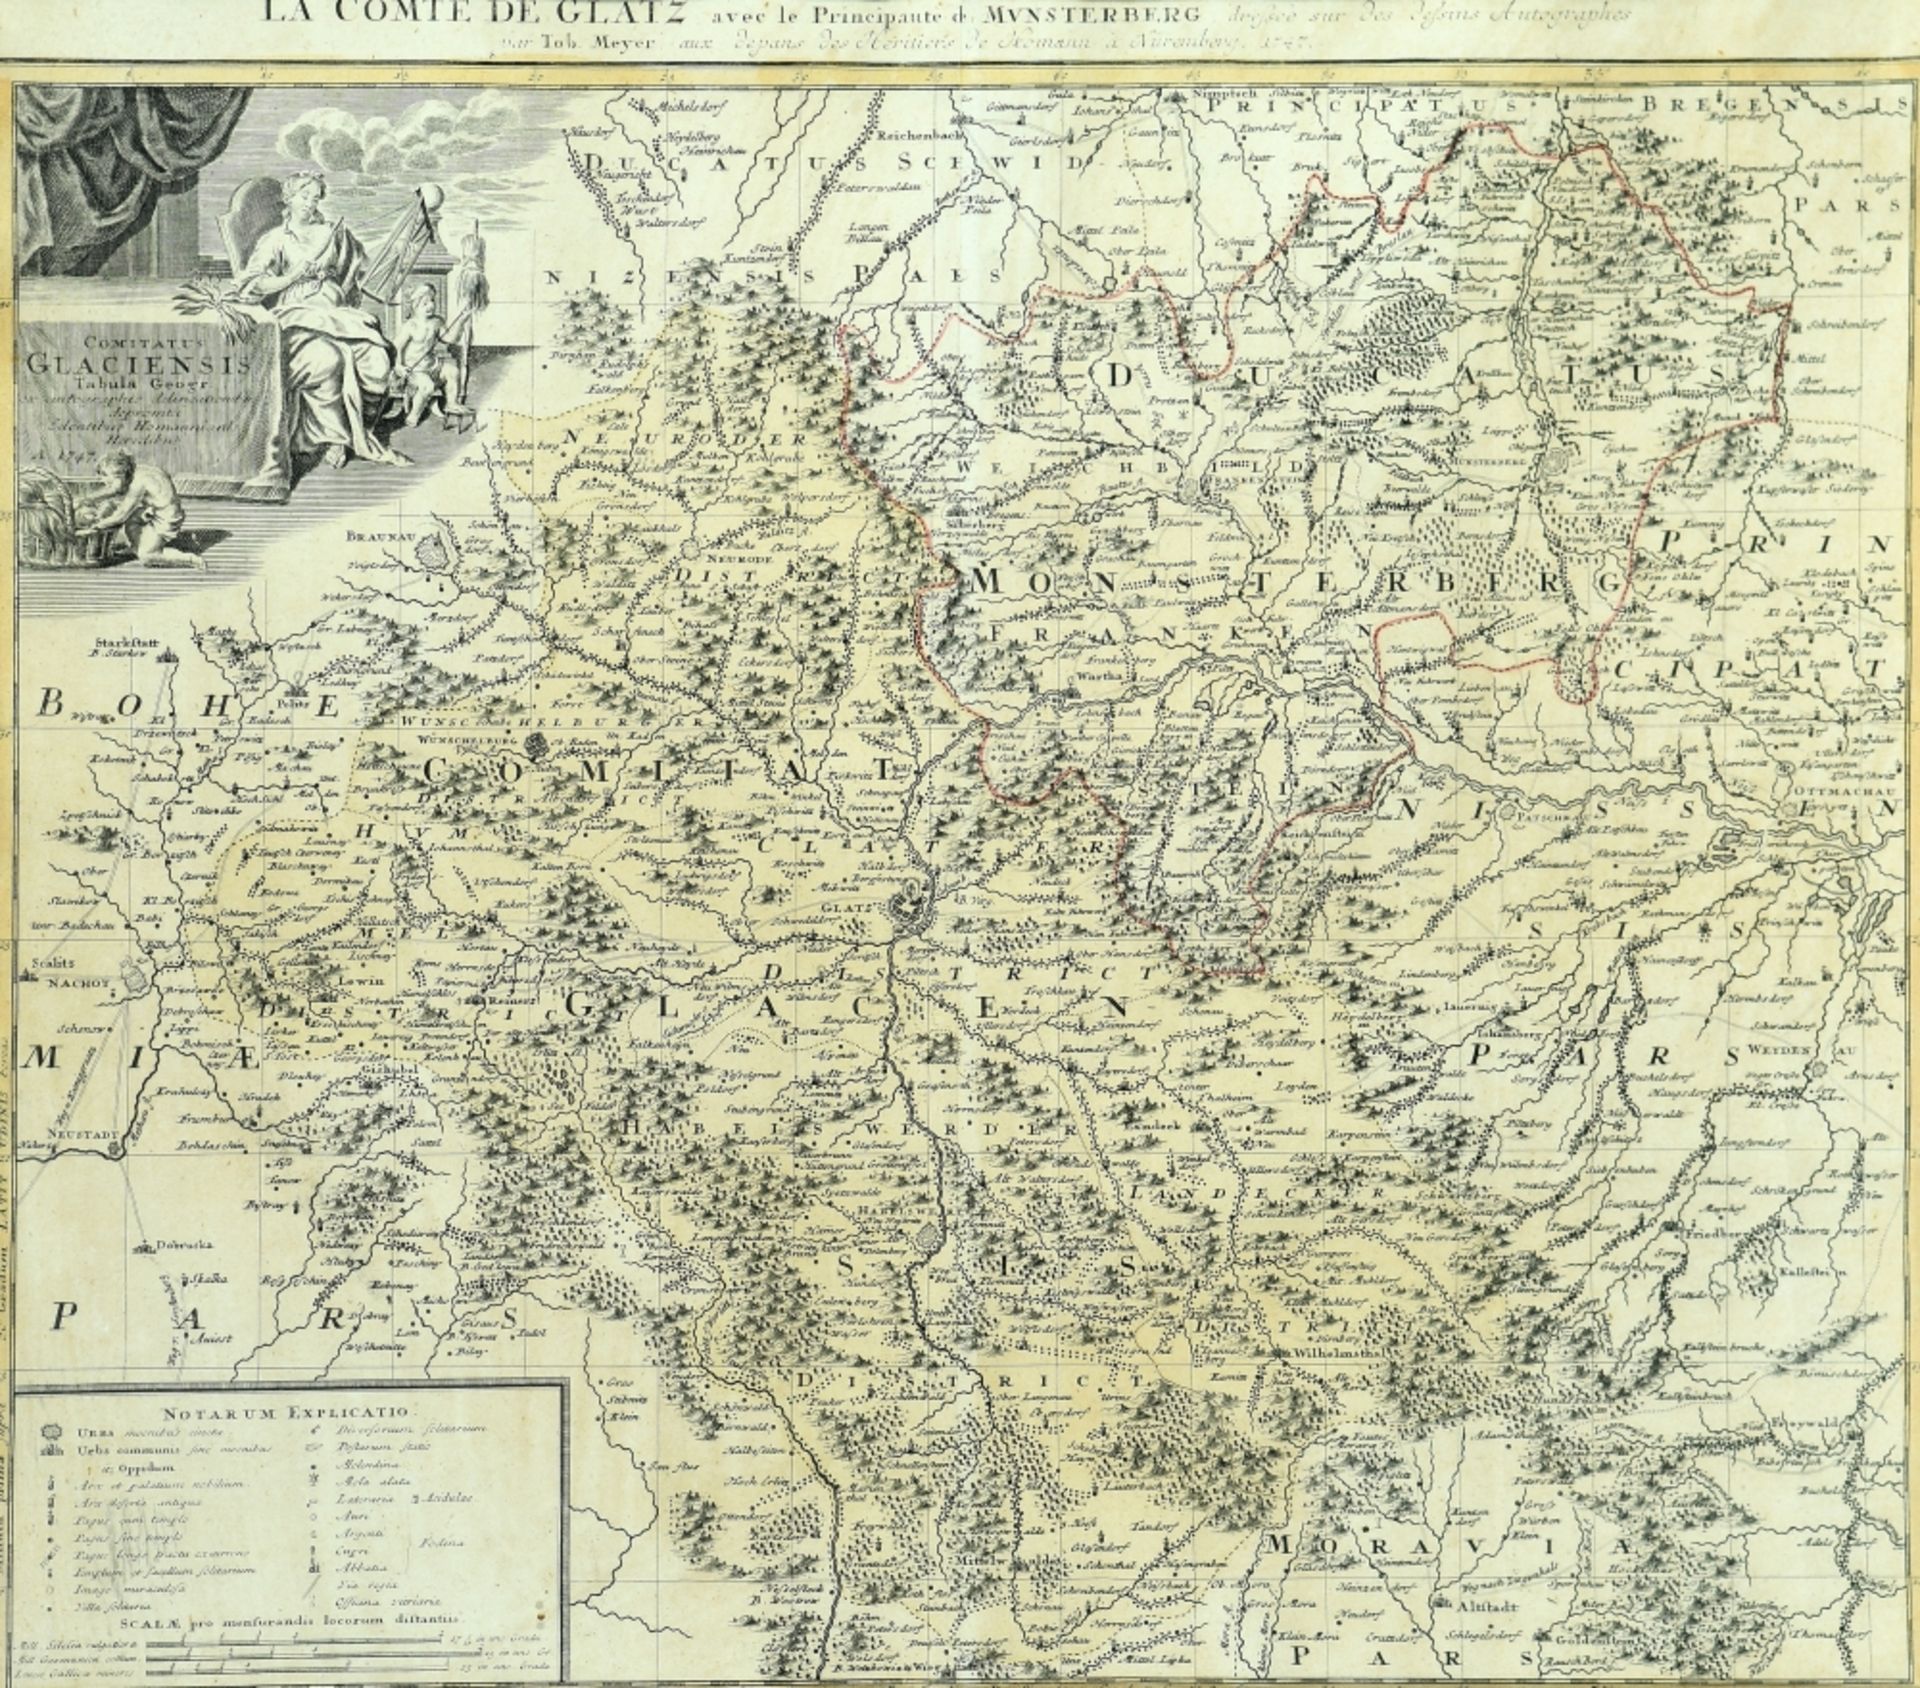 Landkarte "La comte de Glatz avec le Principaute de Munsterberg" - Bild 2 aus 2